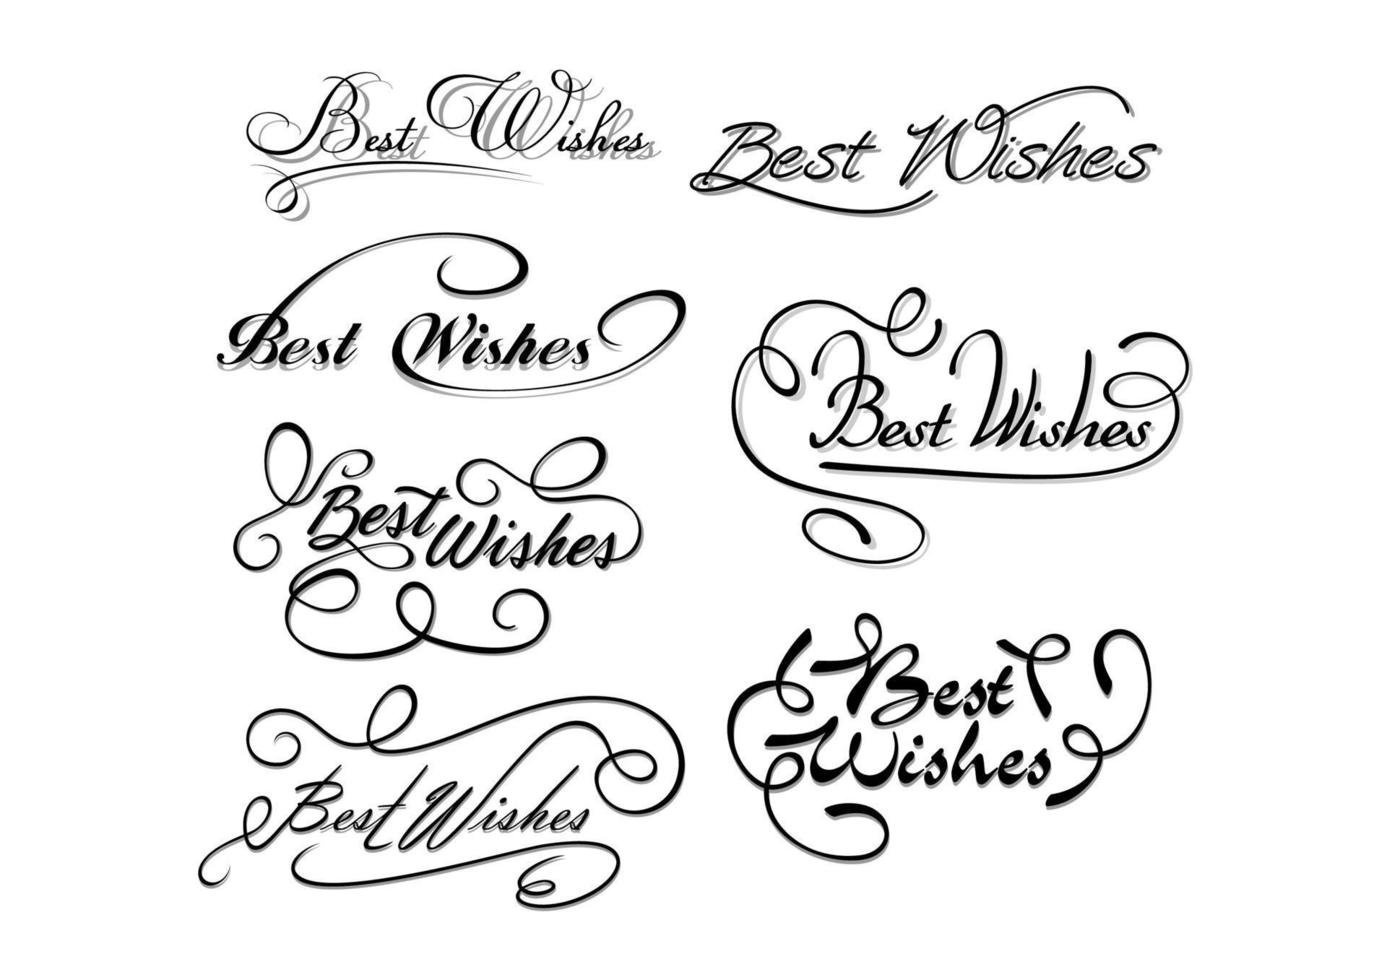 Best wishes calligraphic elements vector